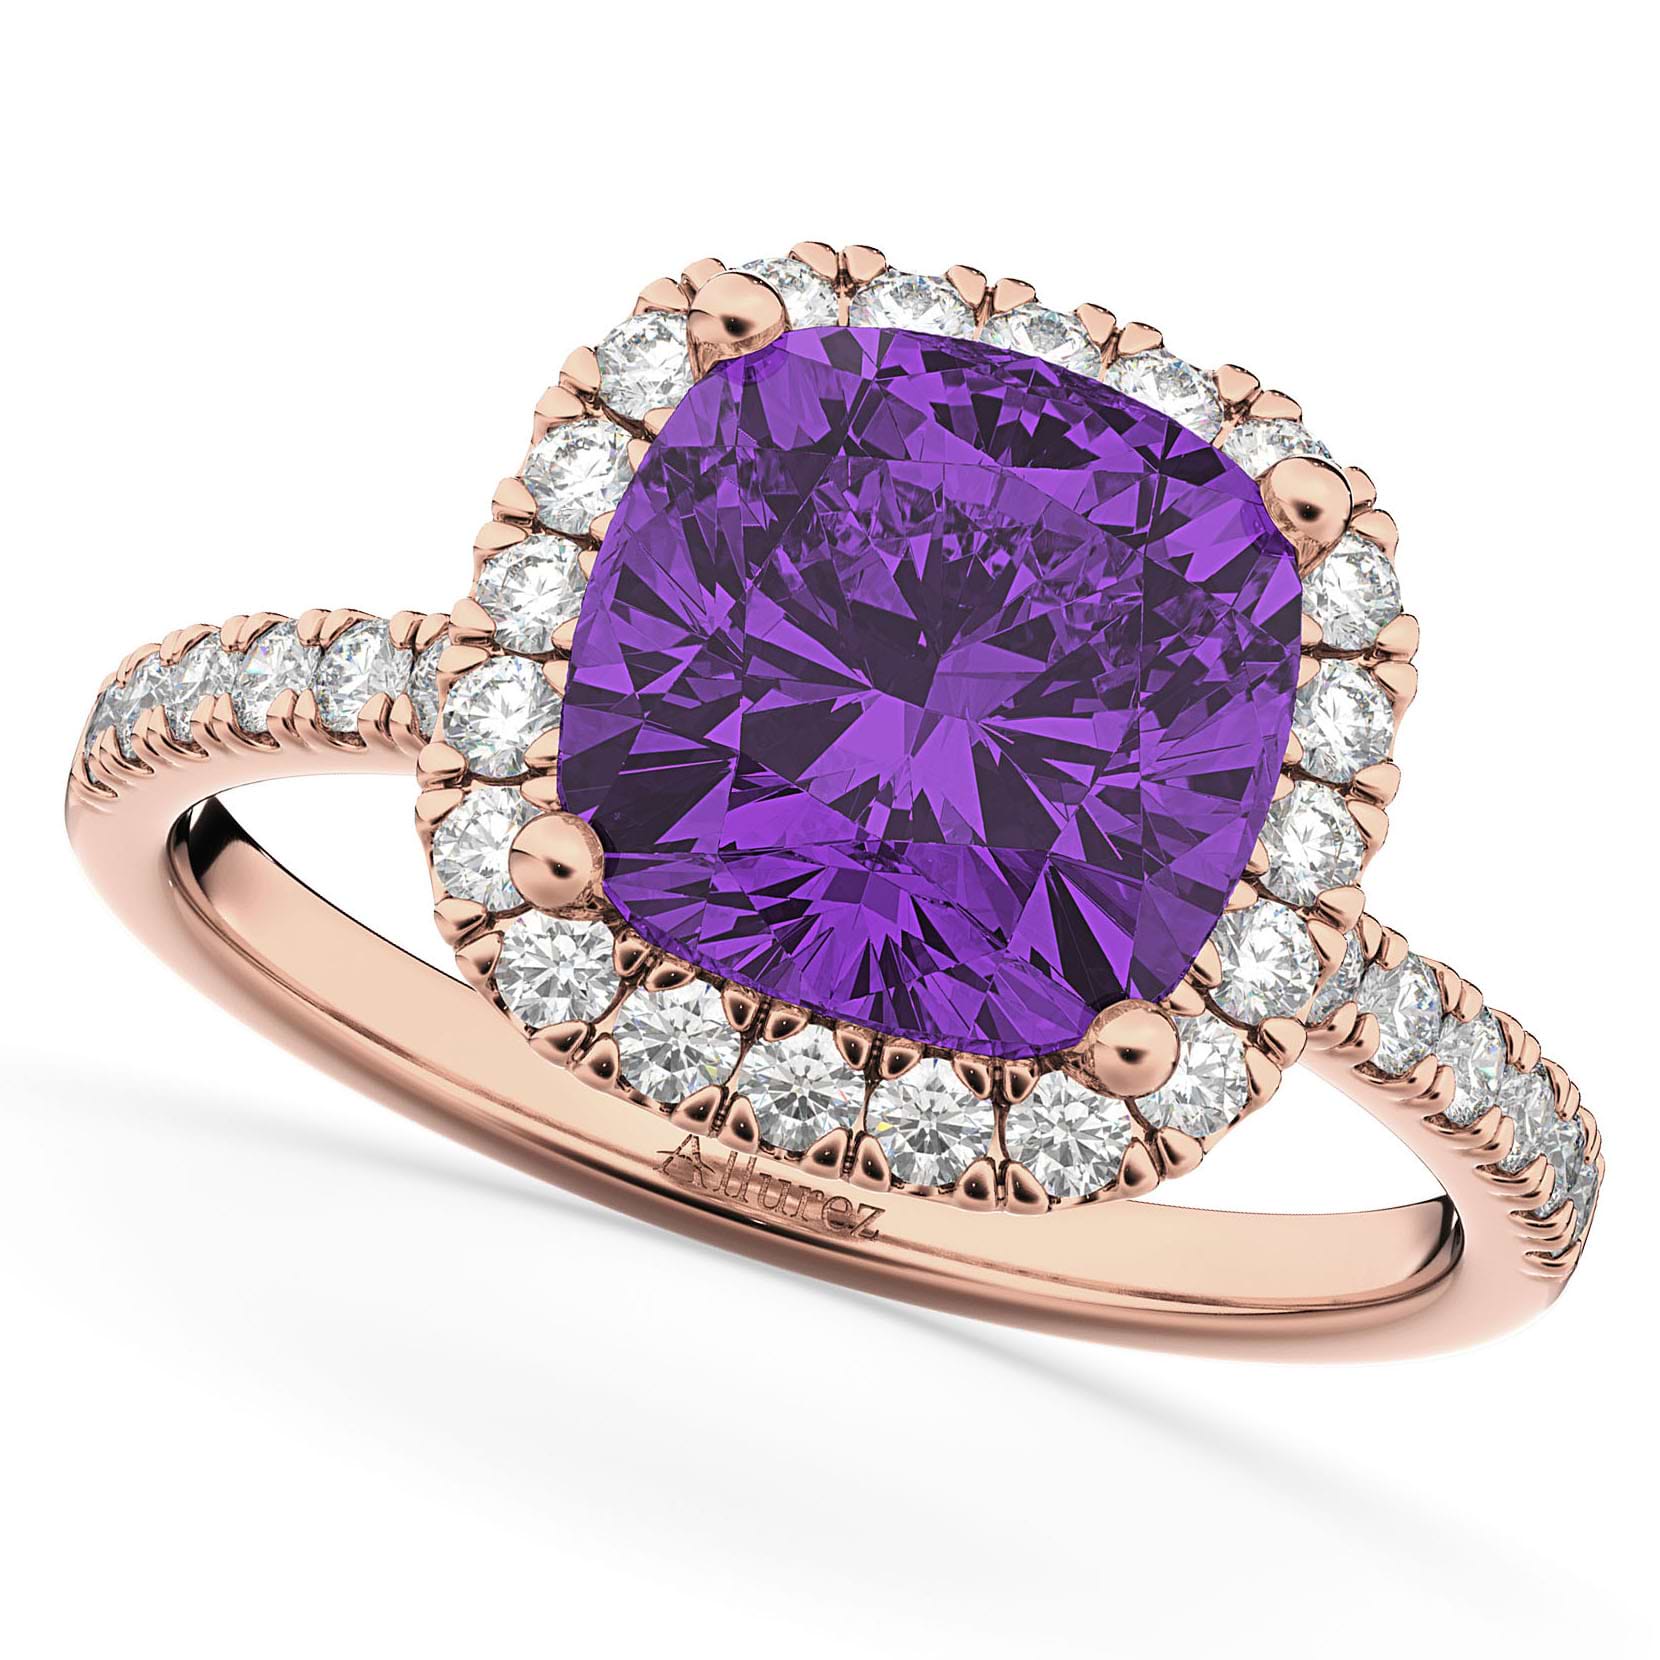 Cushion Cut Halo Amethyst & Diamond Engagement Ring 14k Rose Gold (3.11ct)